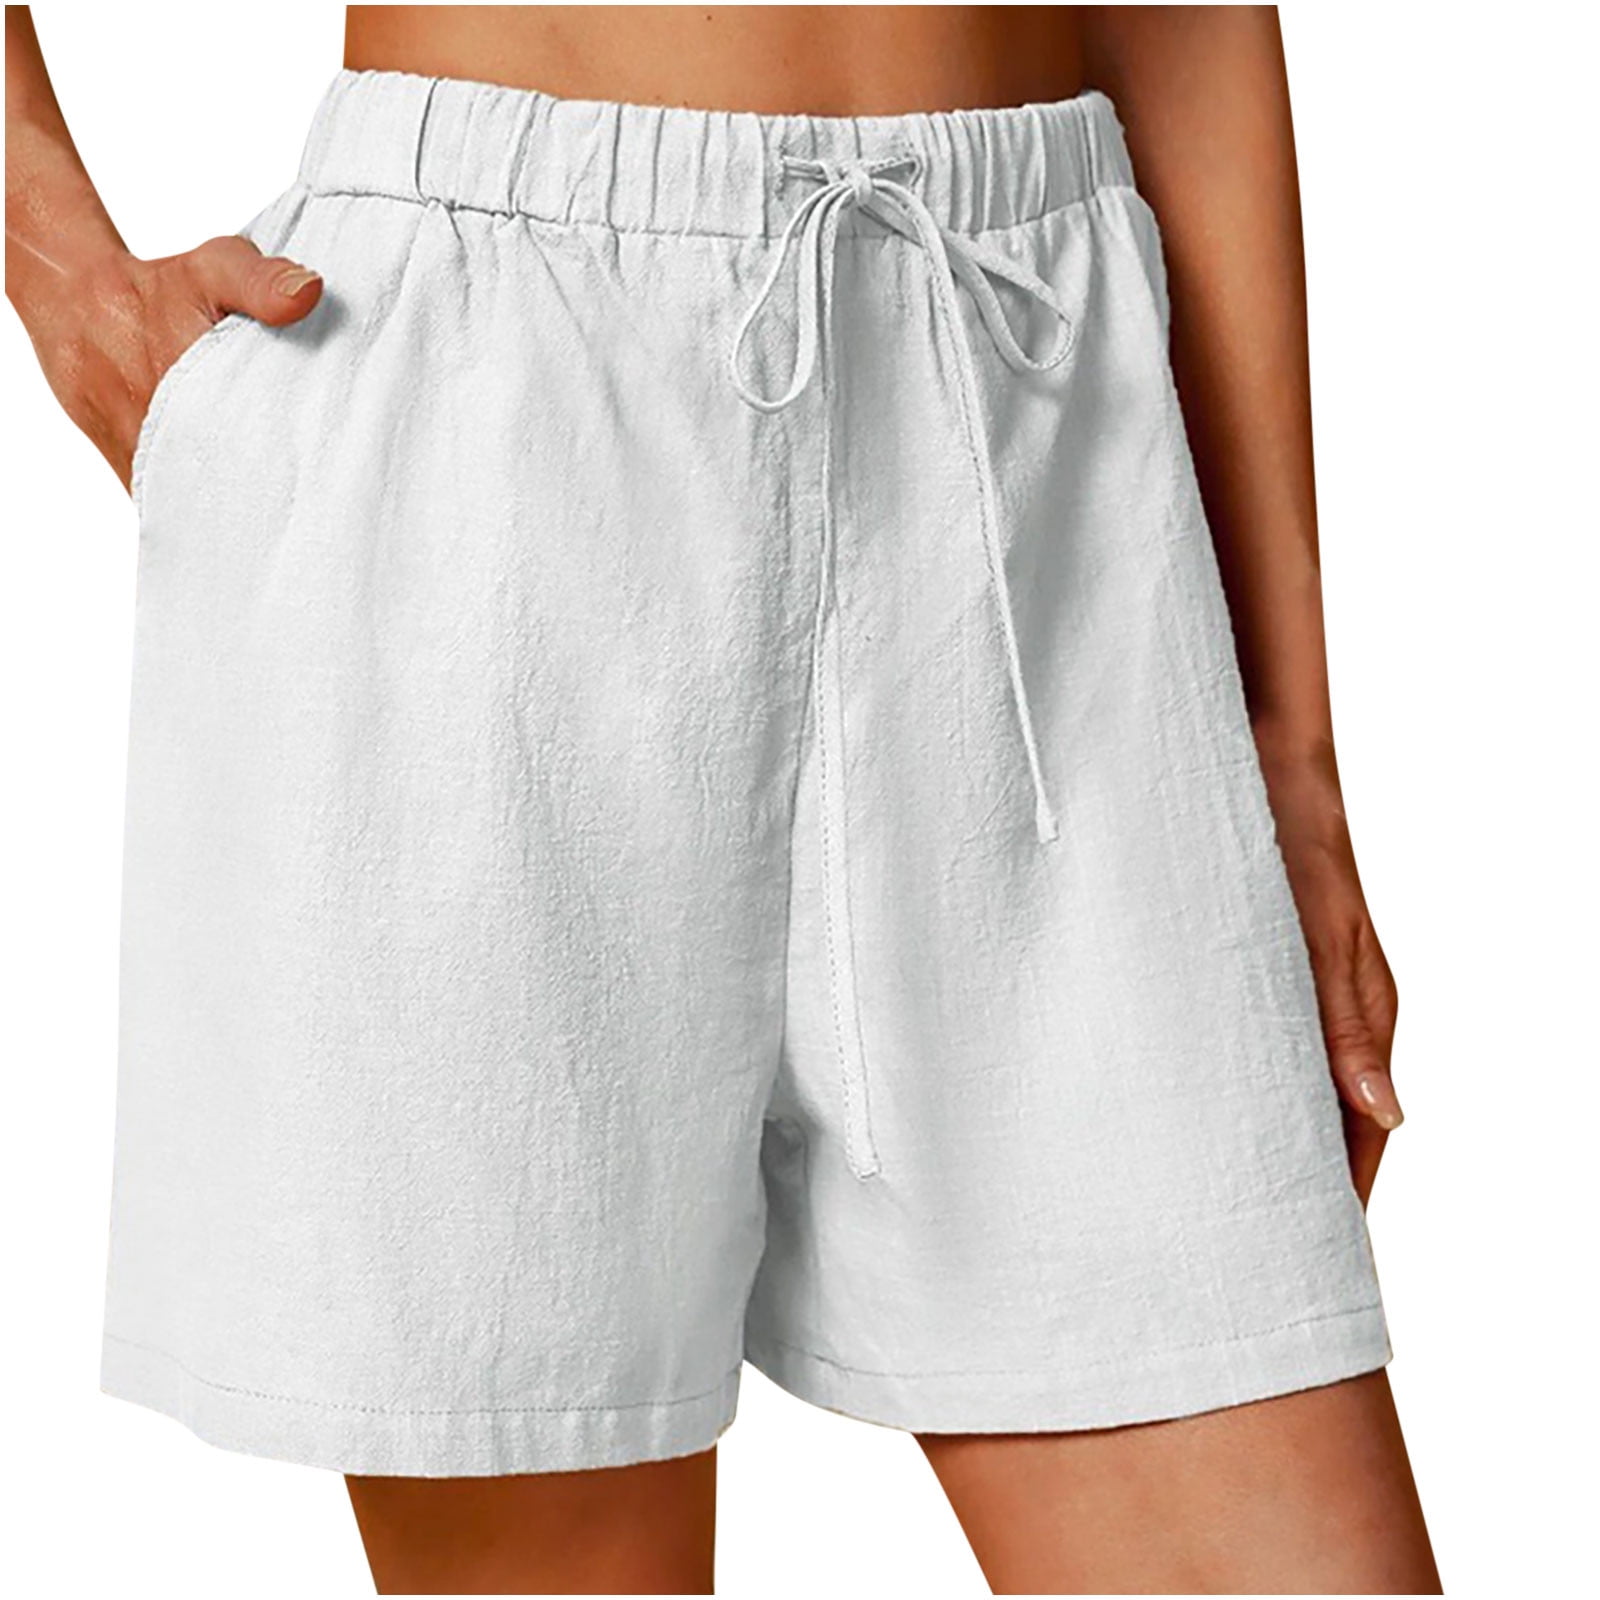 Olyvenn Women's Cotton Linen Shorts Solid Color Comfortable 